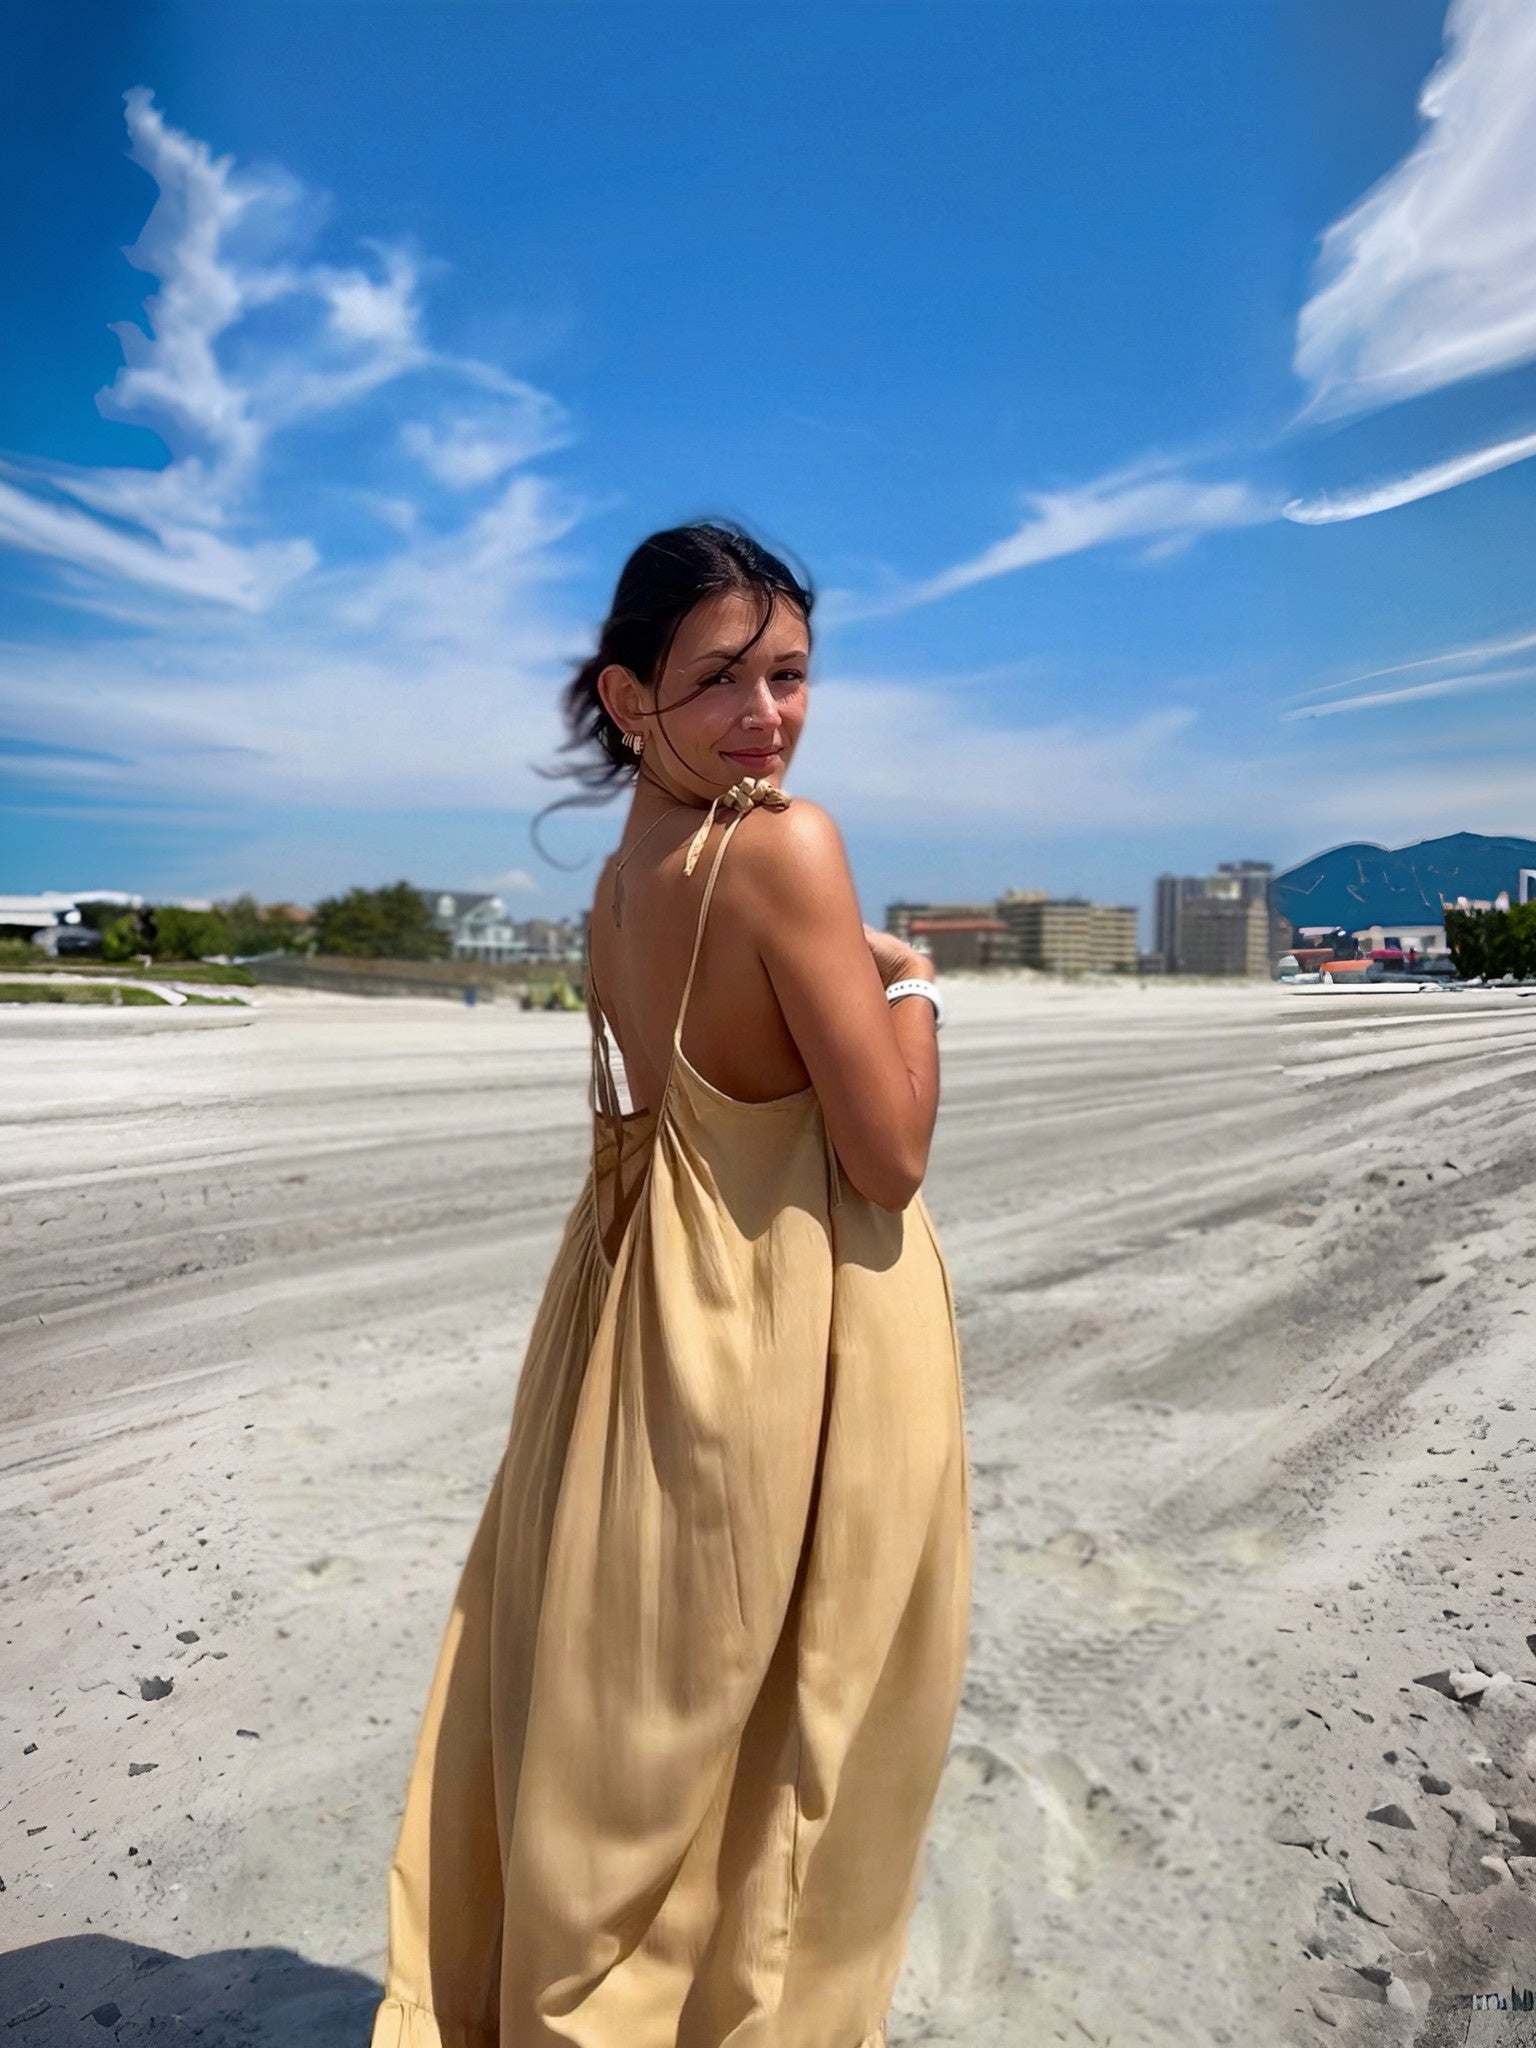 Shop MALI Backless Maxi Dress - Summer maxi Dress  Openback back dress beach dress| Coco De Chom